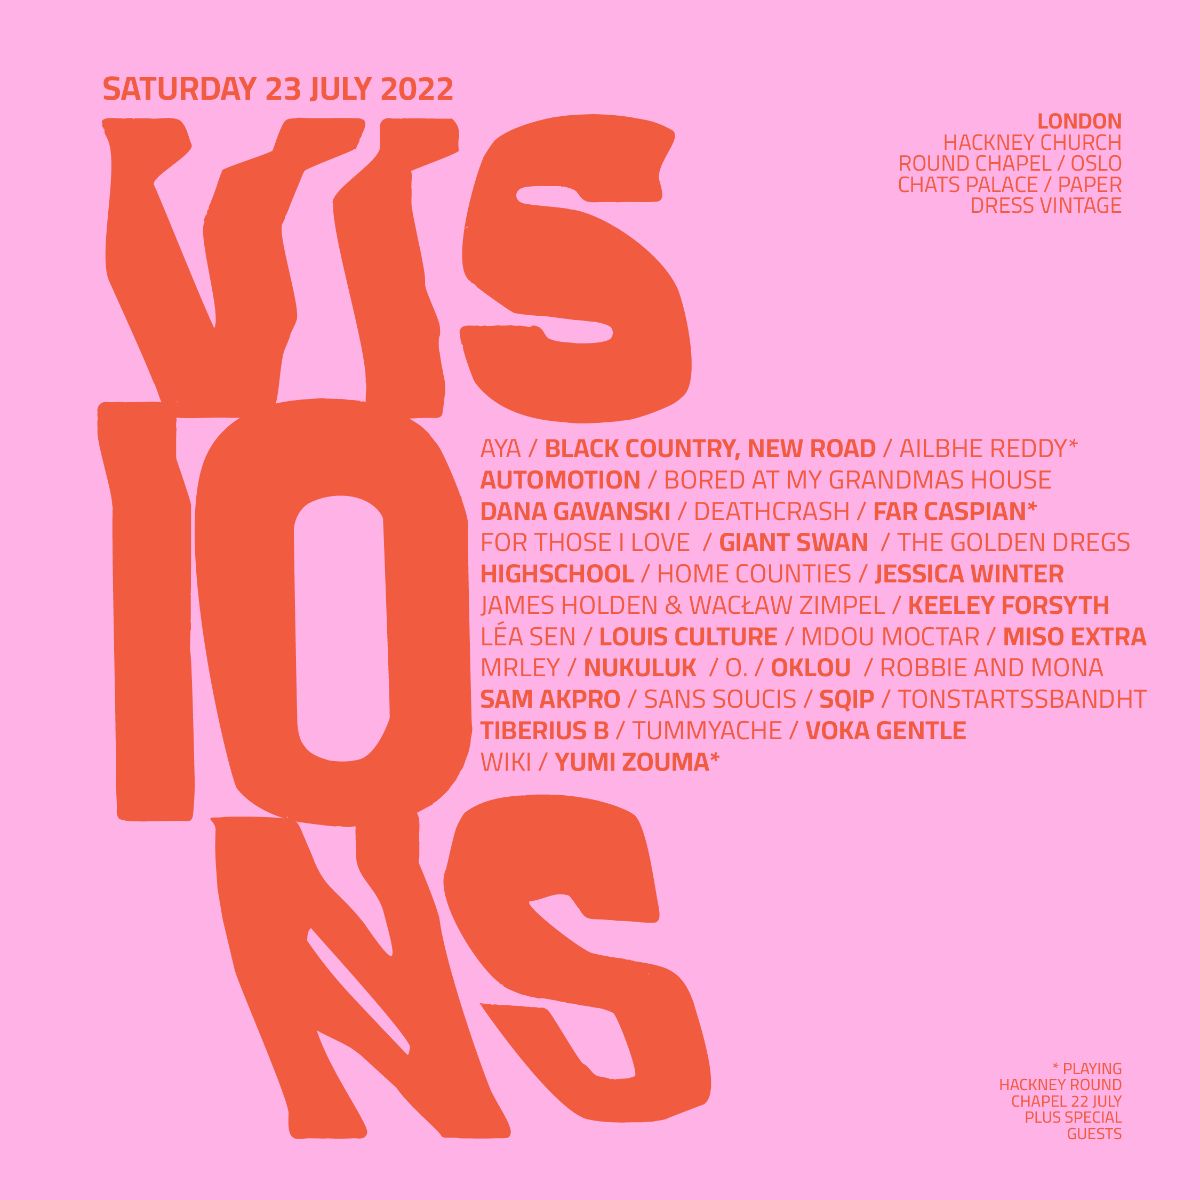 VISIONS Festival 2022 Announces Final Music Acts + Dog Show